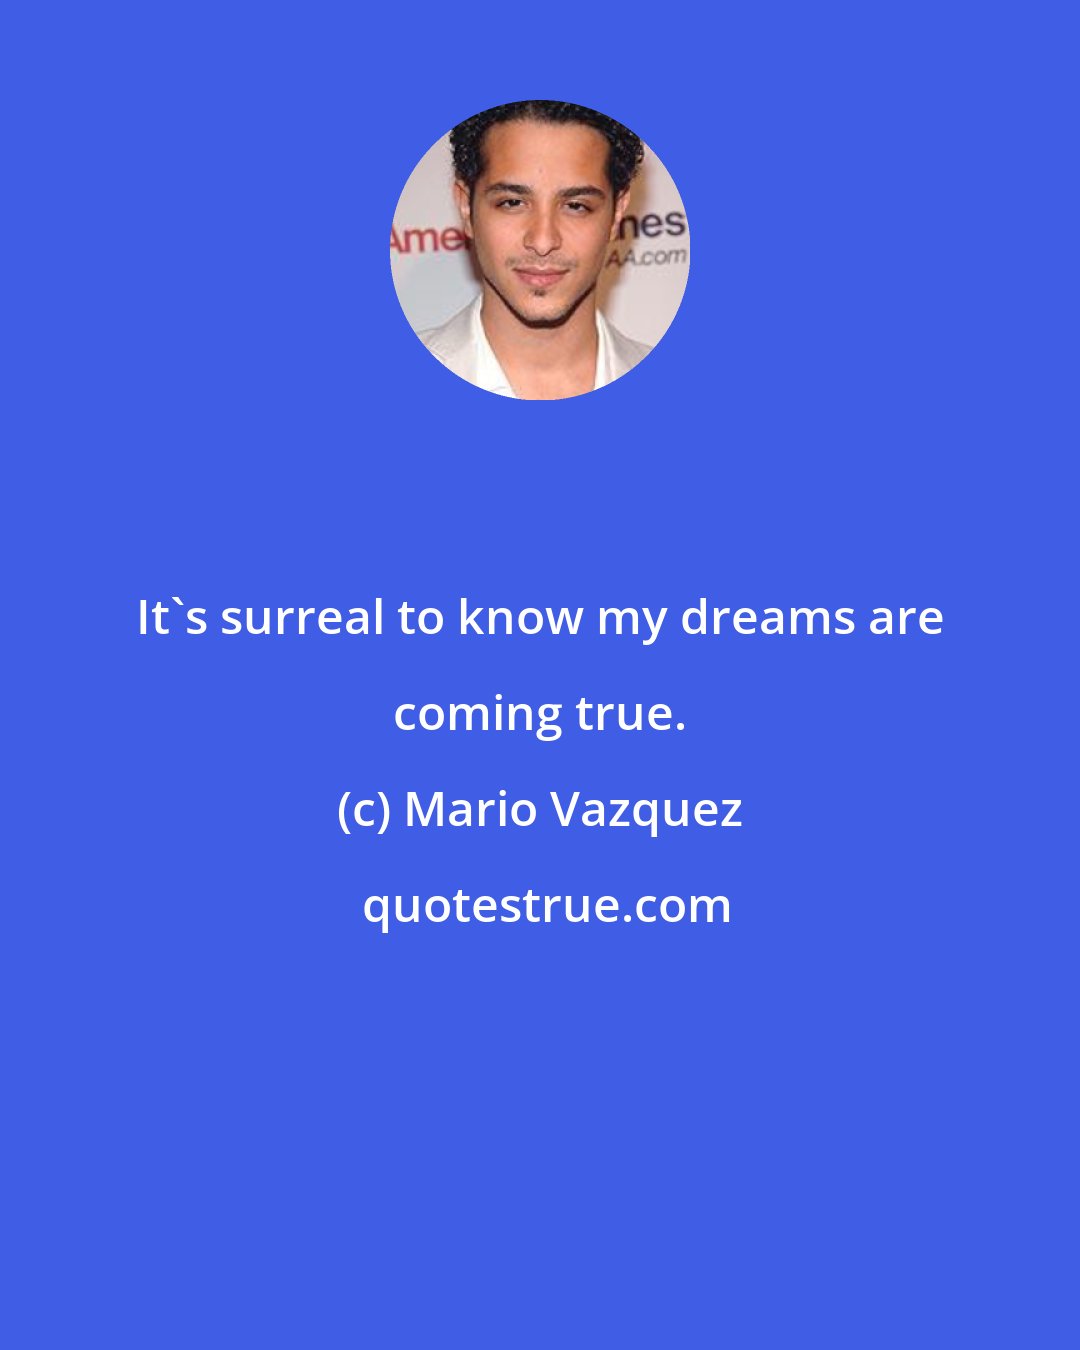 Mario Vazquez: It's surreal to know my dreams are coming true.